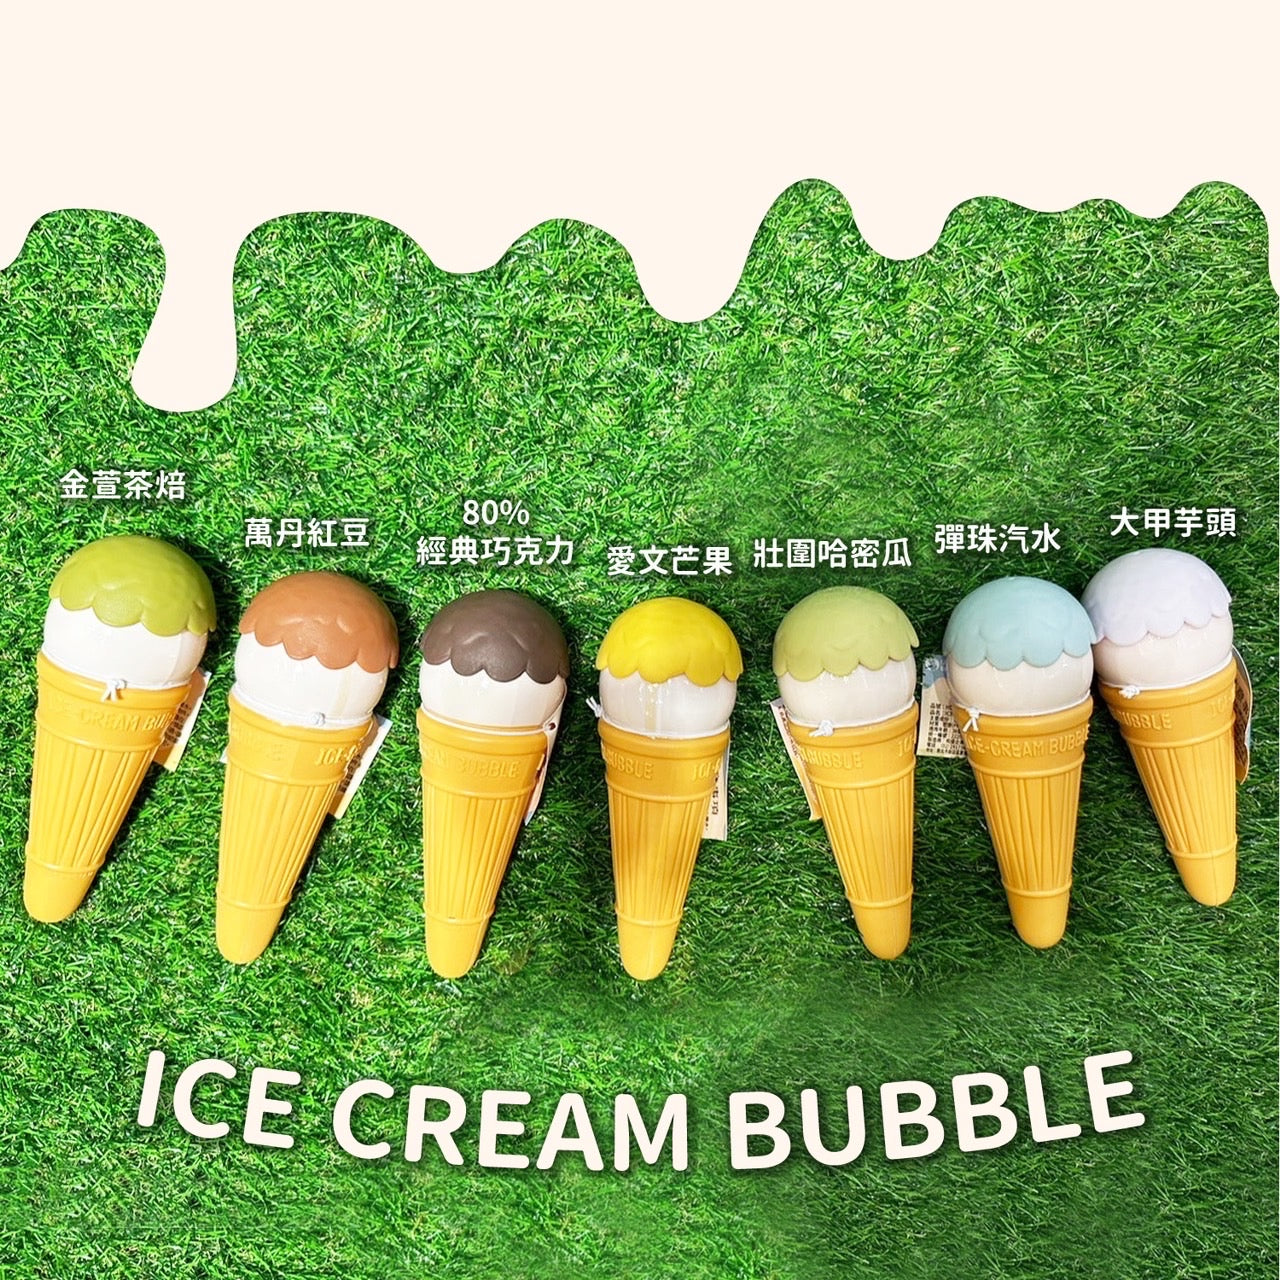 Uncle bubble - Ice cream bubble